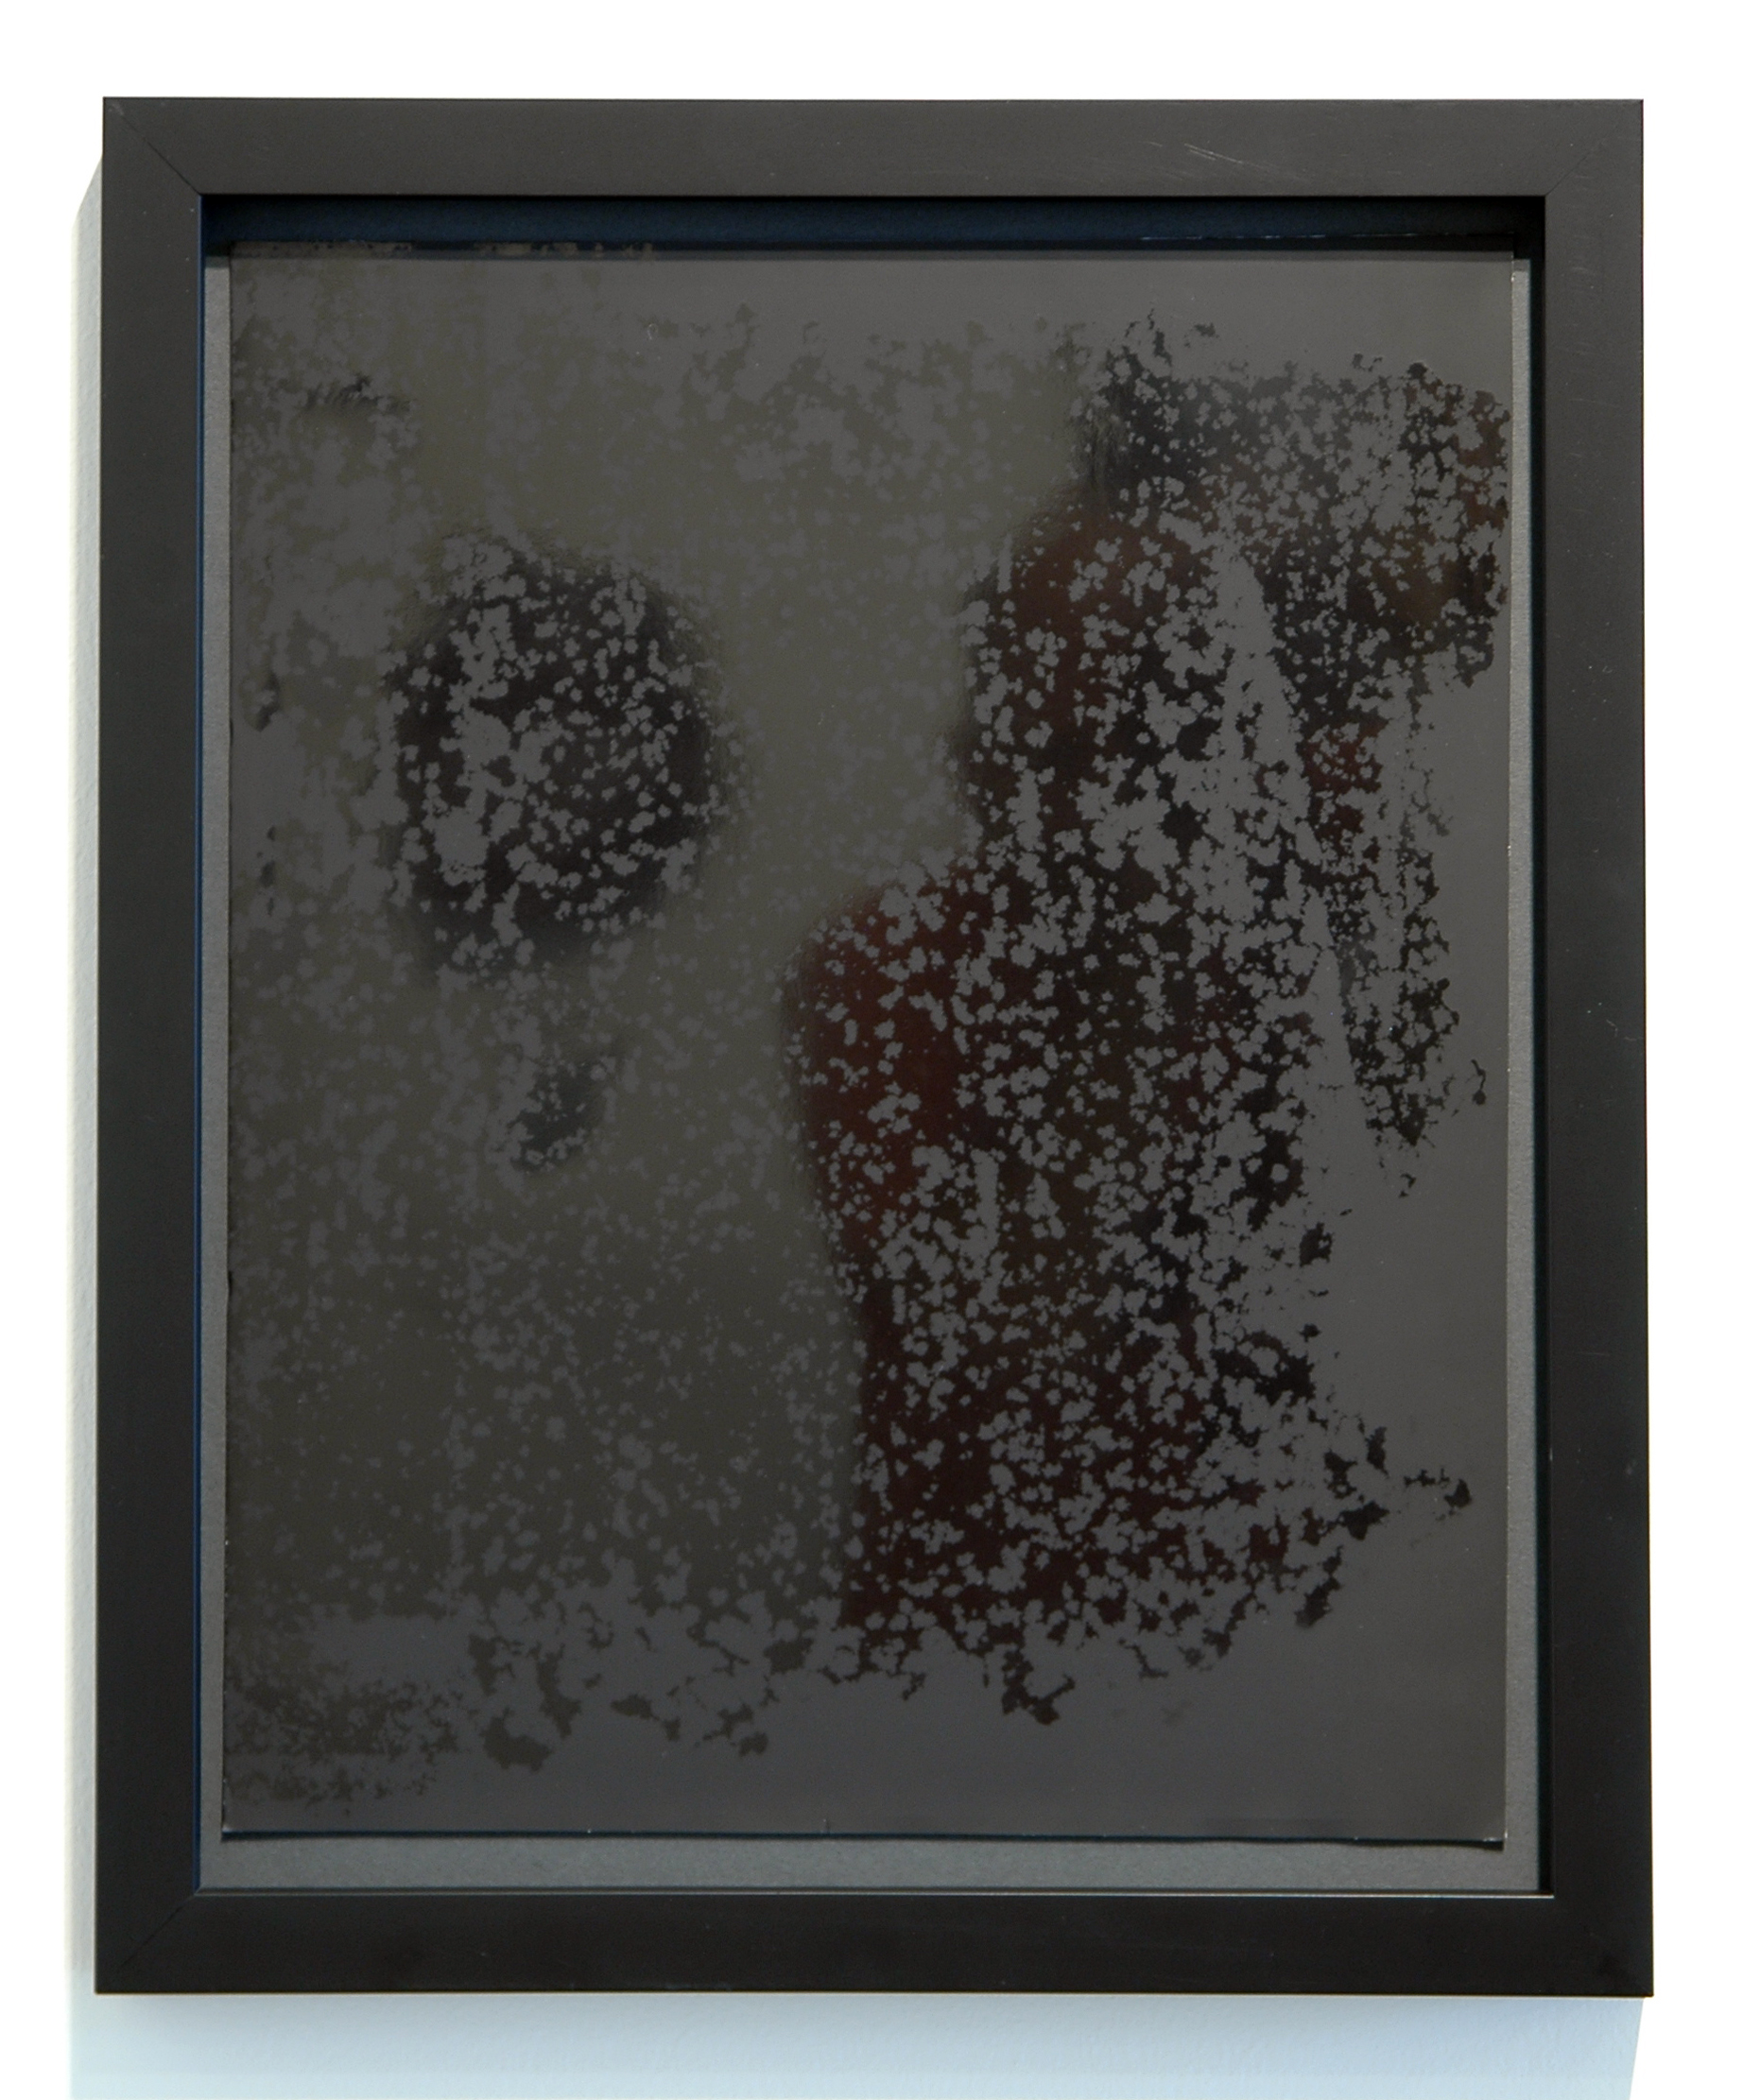   WITH CINDER BLOCKS WE FLATTEN OUR PHOTOGRAPHS  C. Wright Daniel,&nbsp; Untitled (Burnished 1) , unique silver gelatin print, 16.25" x 13.25" (framed), 2013 